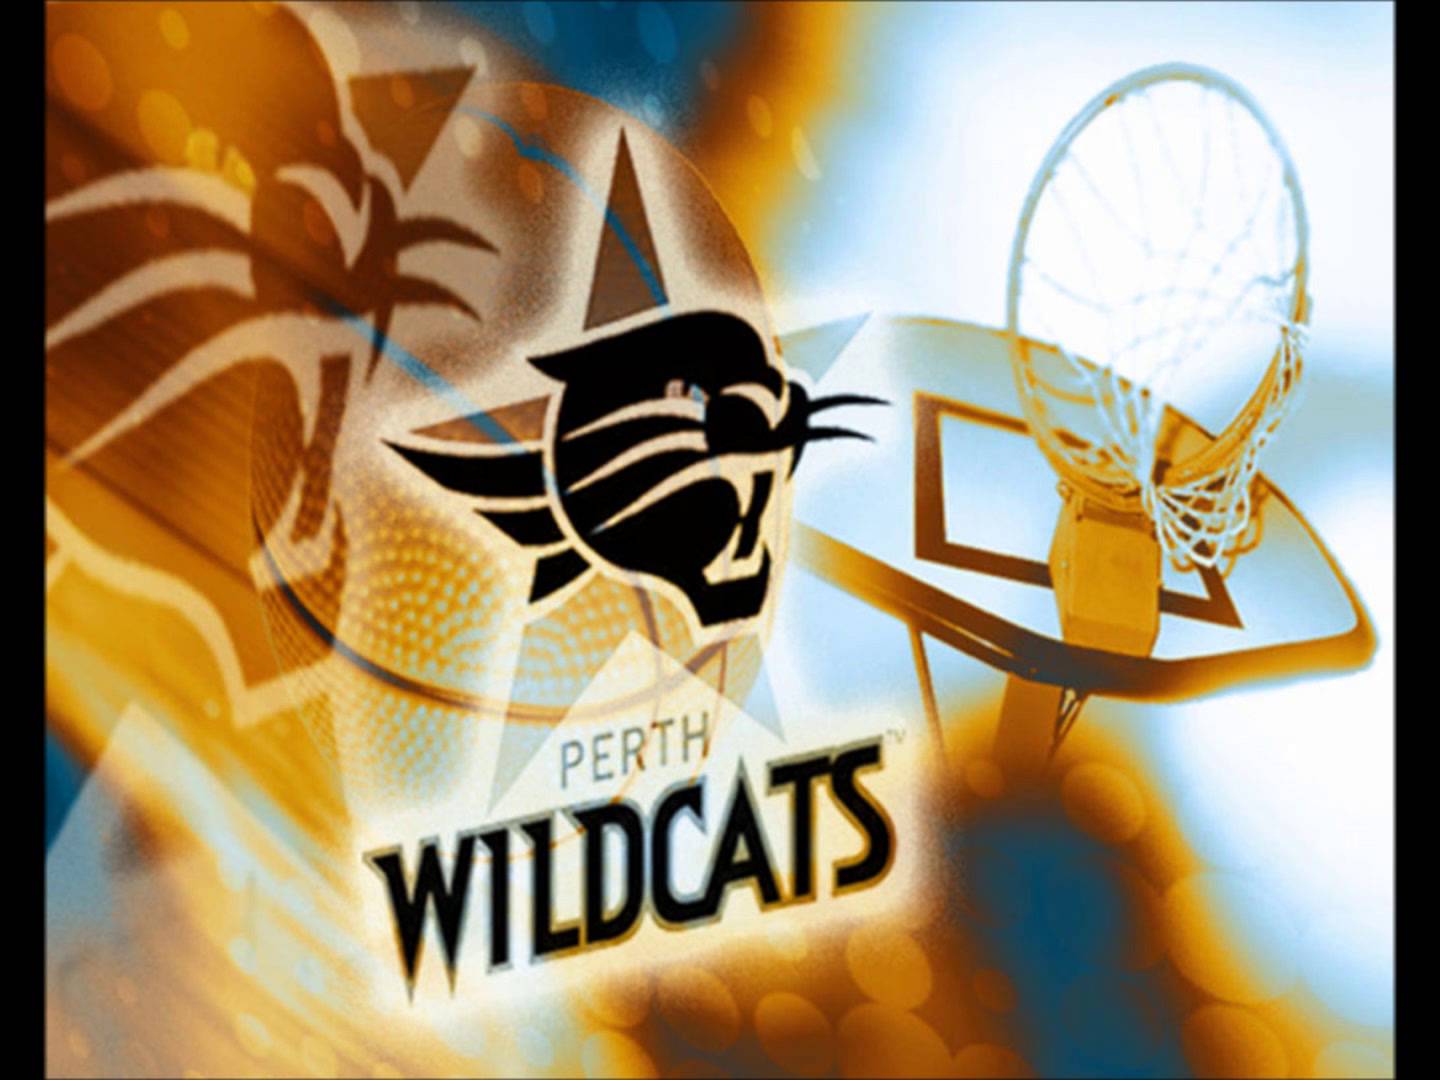 Perth Wildcats #1